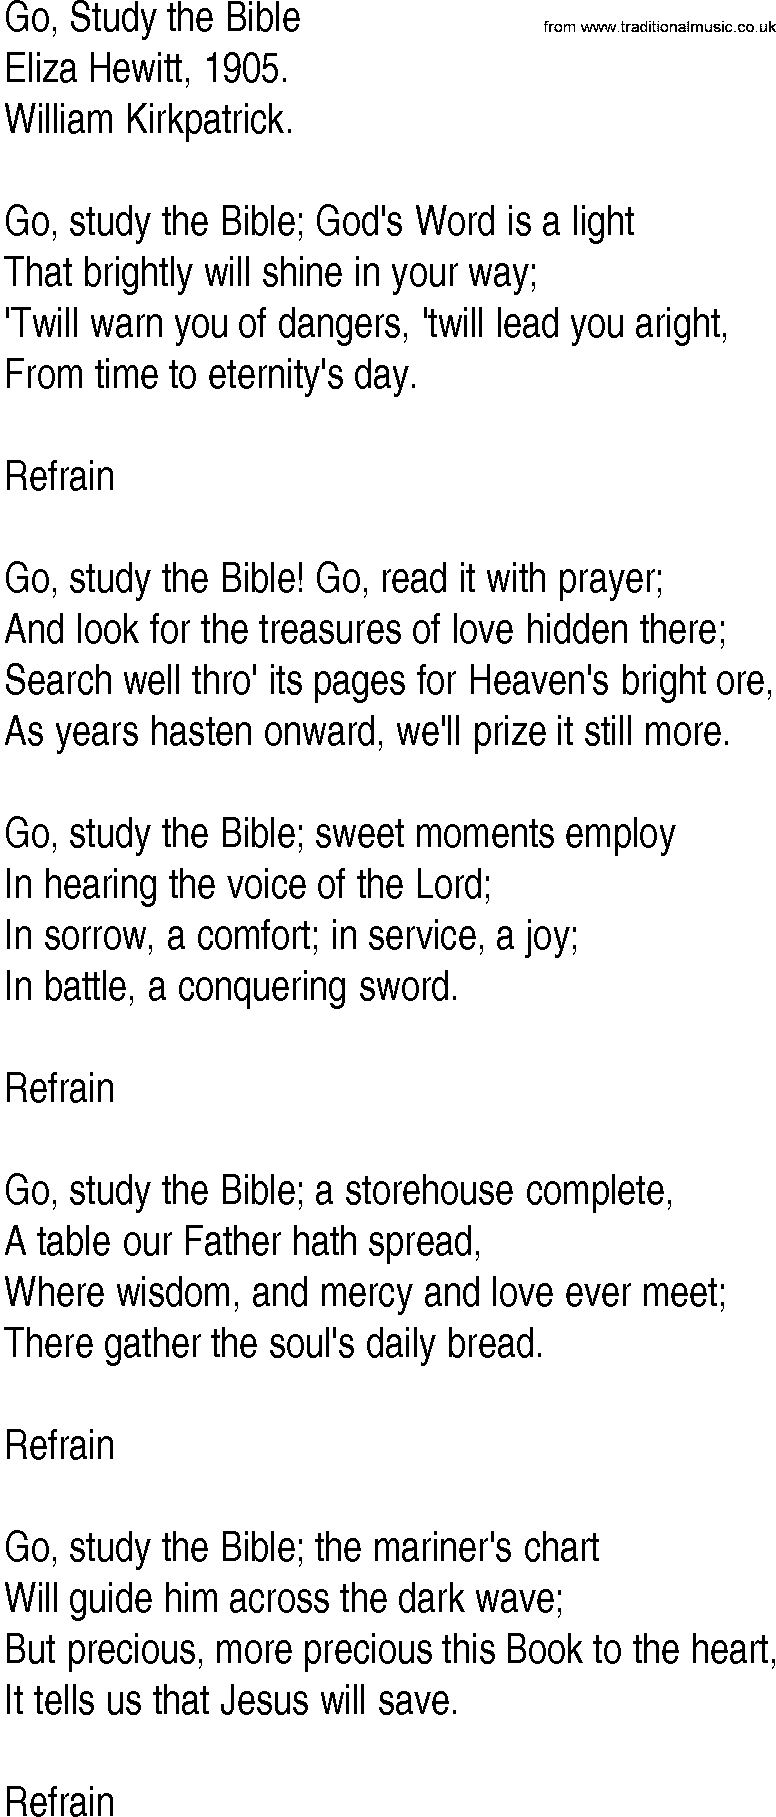 Hymn and Gospel Song: Go, Study the Bible by Eliza Hewitt lyrics